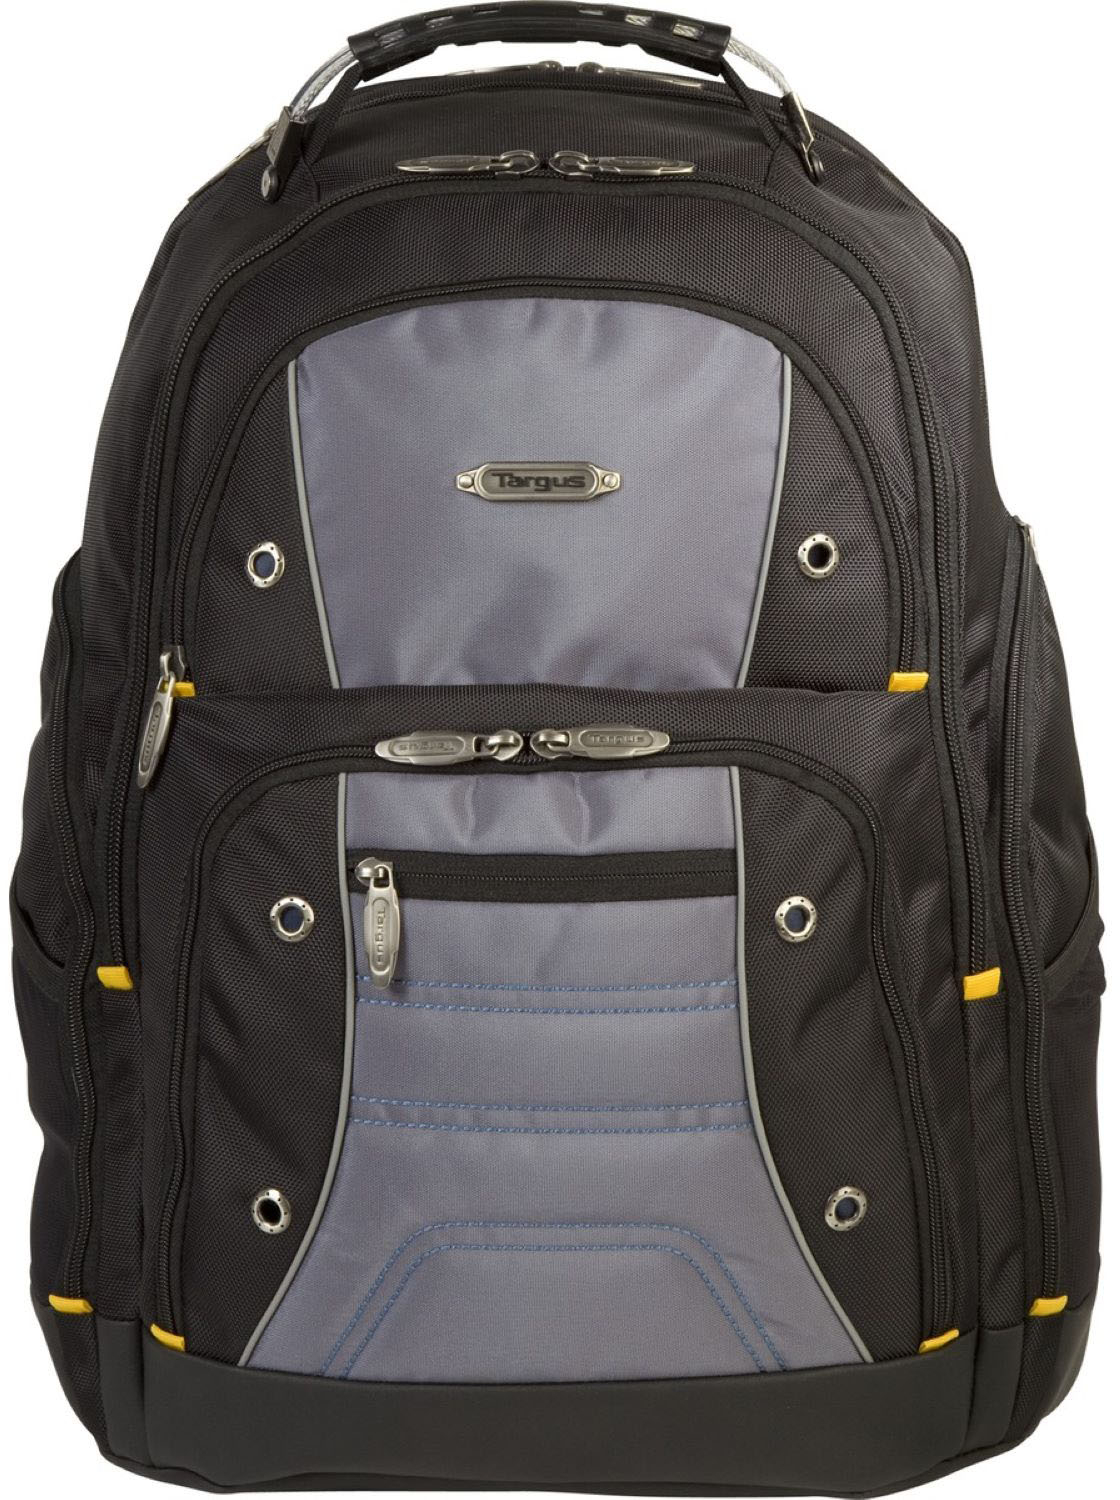 17" laptop computer laptop college student school large backpack bag G3619 